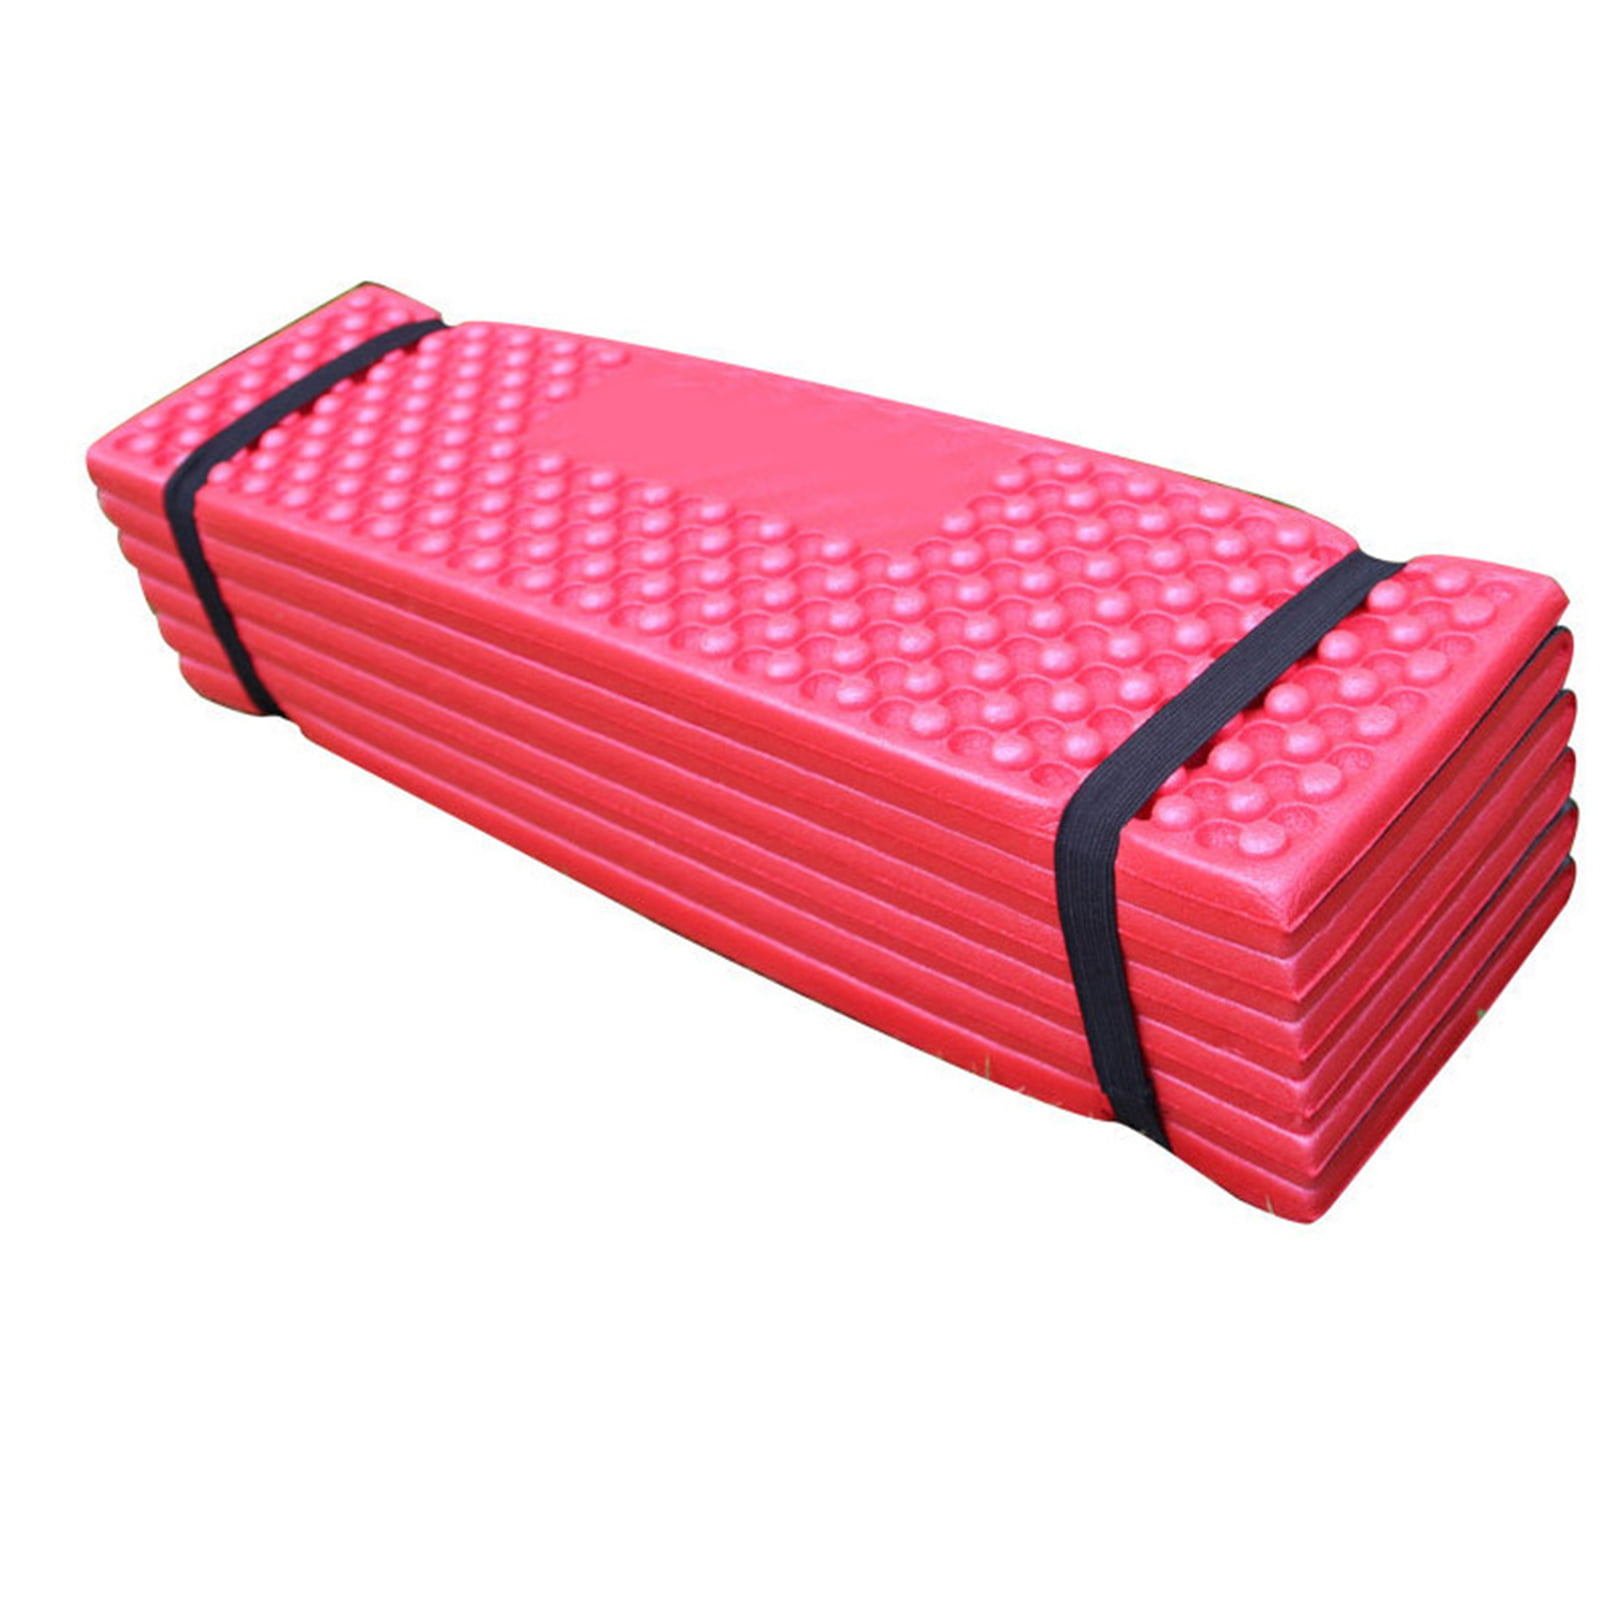 WIDESEA Camping Mat Portable Sleeping Pad Picnic Foam Bed Mattress Travel T V1V4 